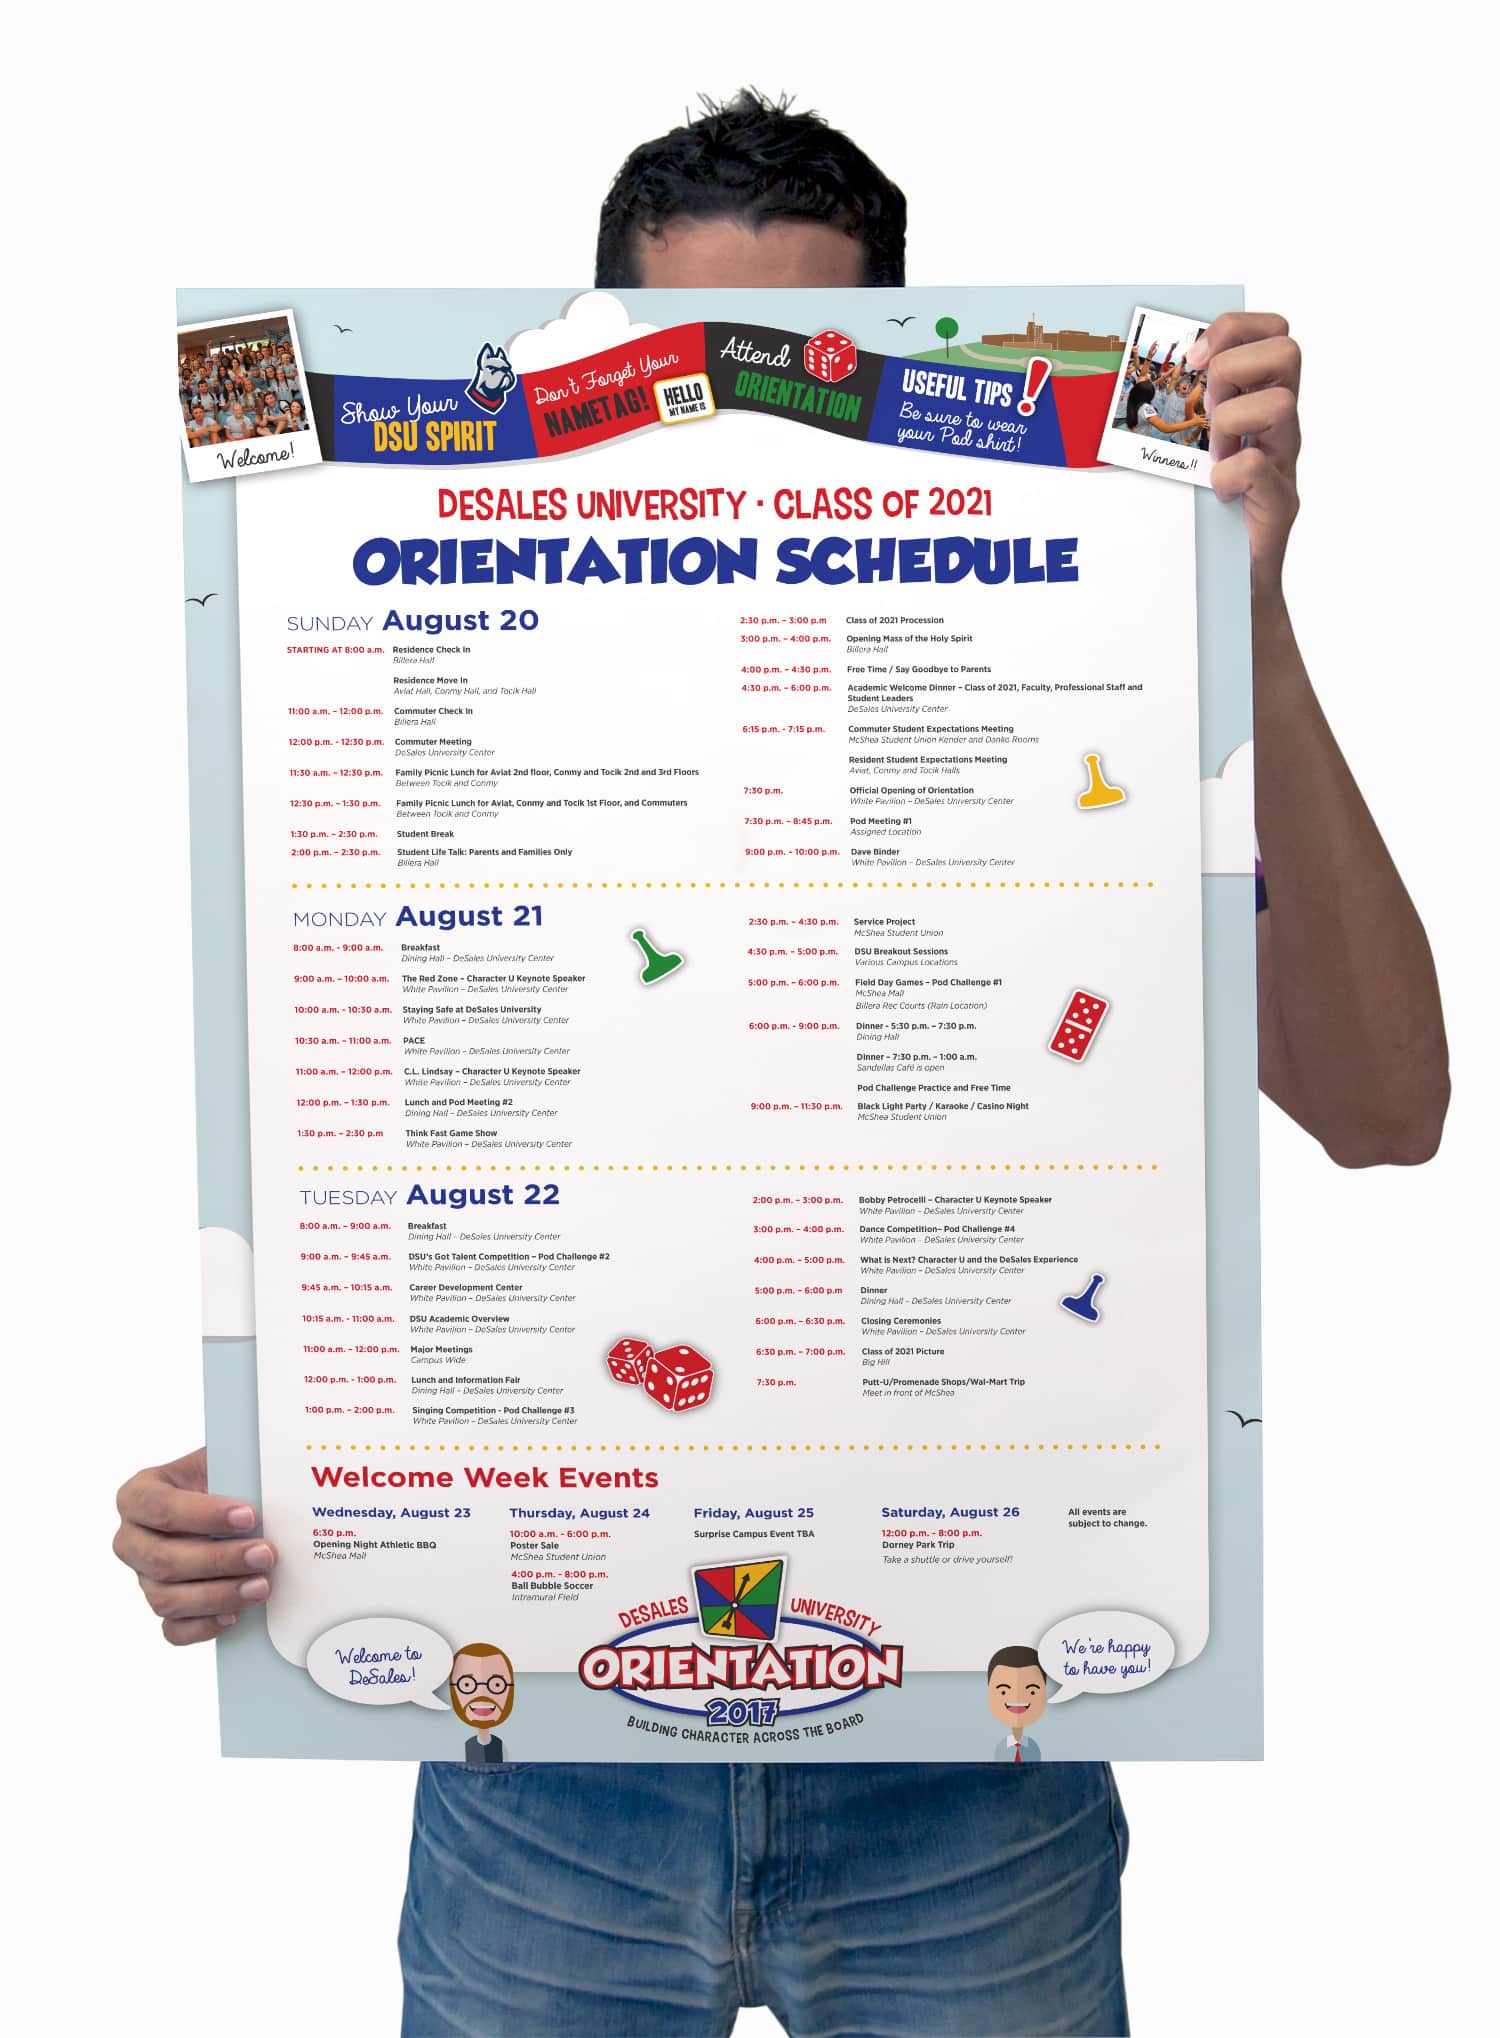 DeSales University Orientation Schedule Poster Design